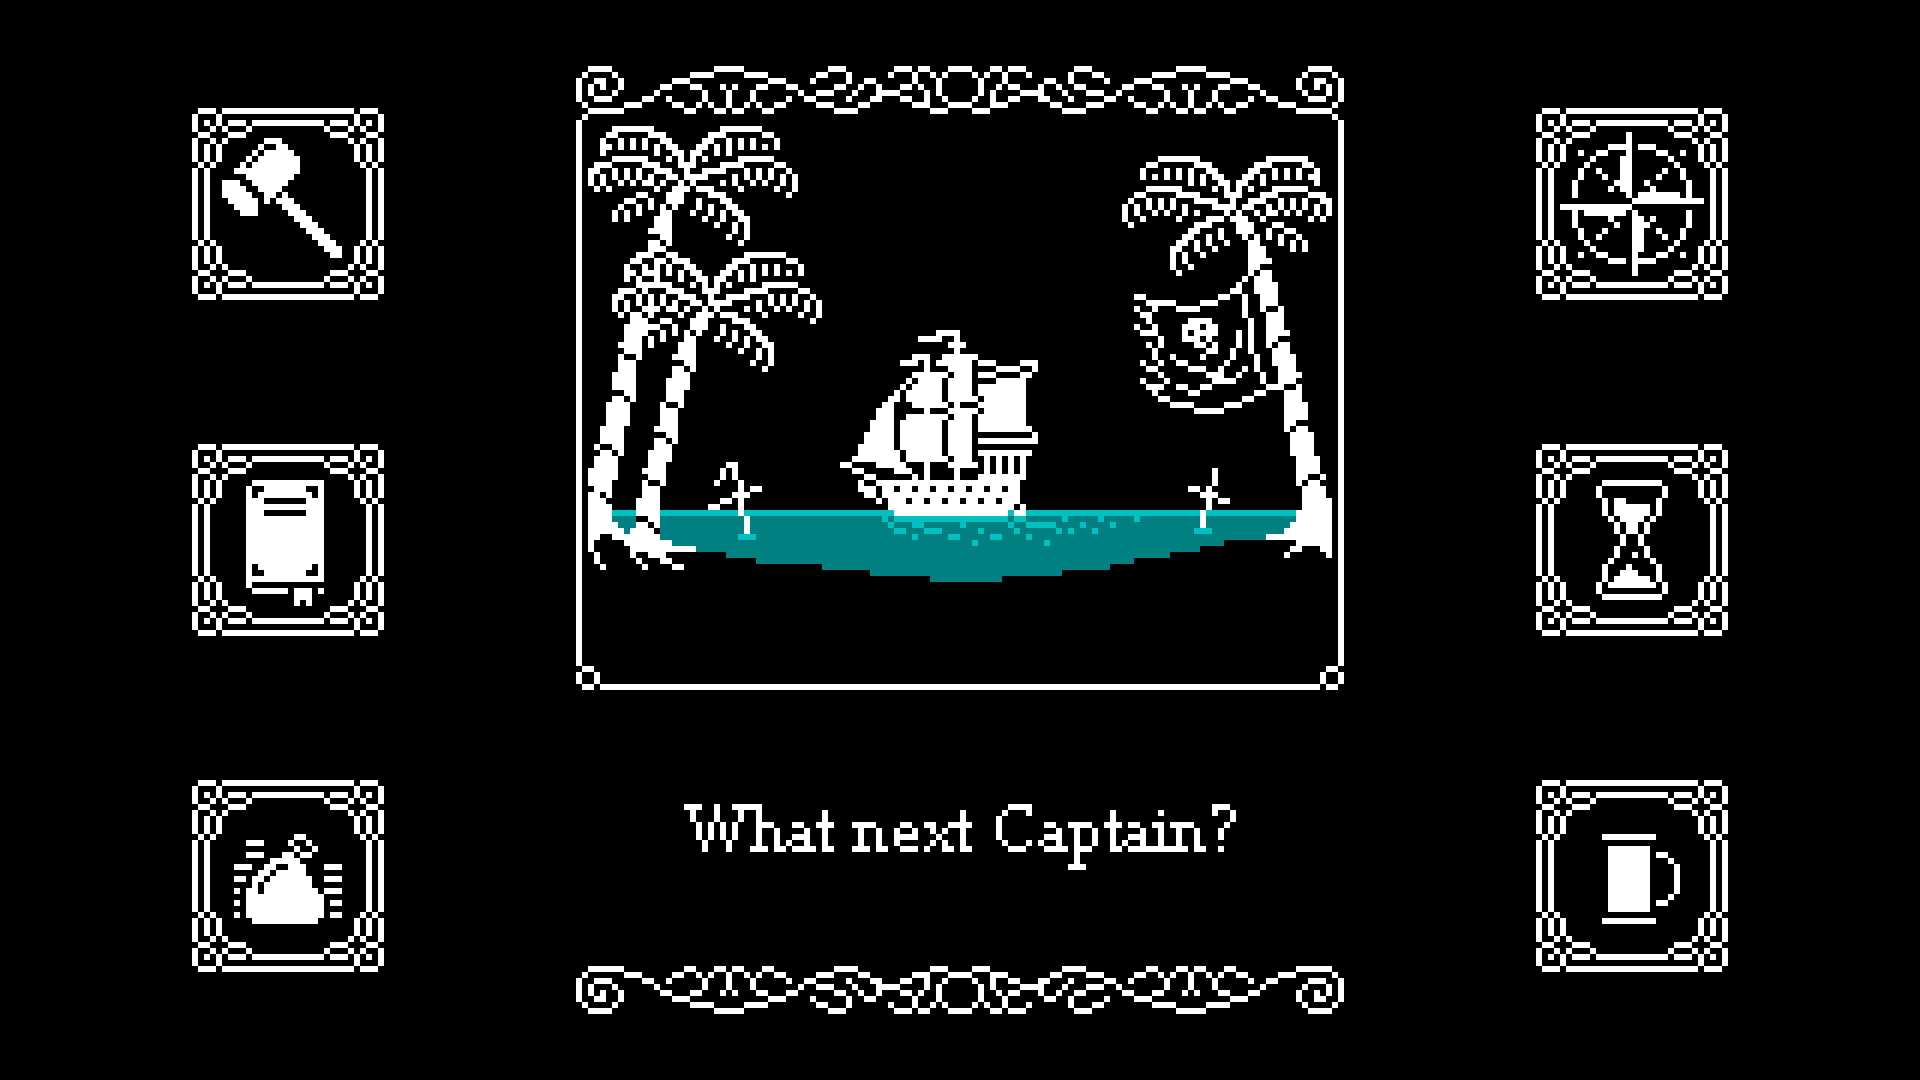 The Caribbean Sail screenshot